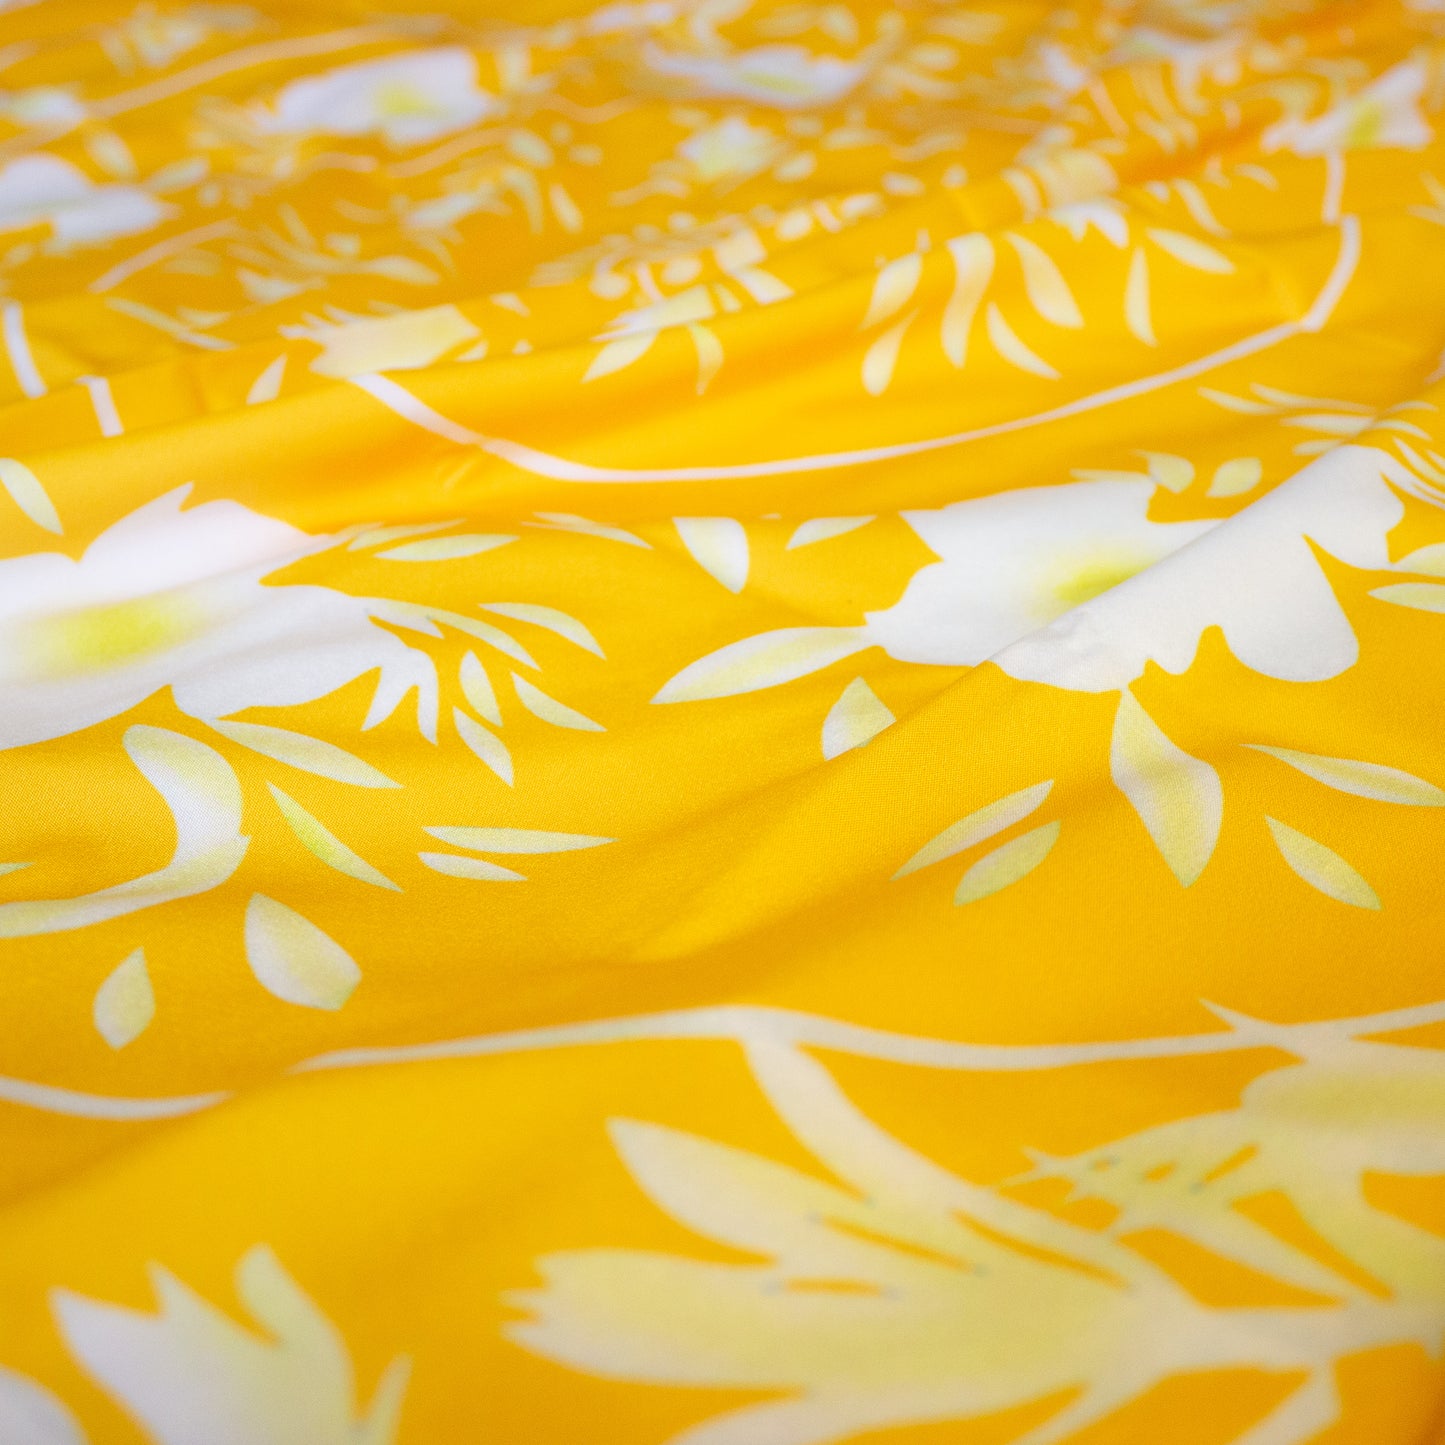 Blossom Tapestry